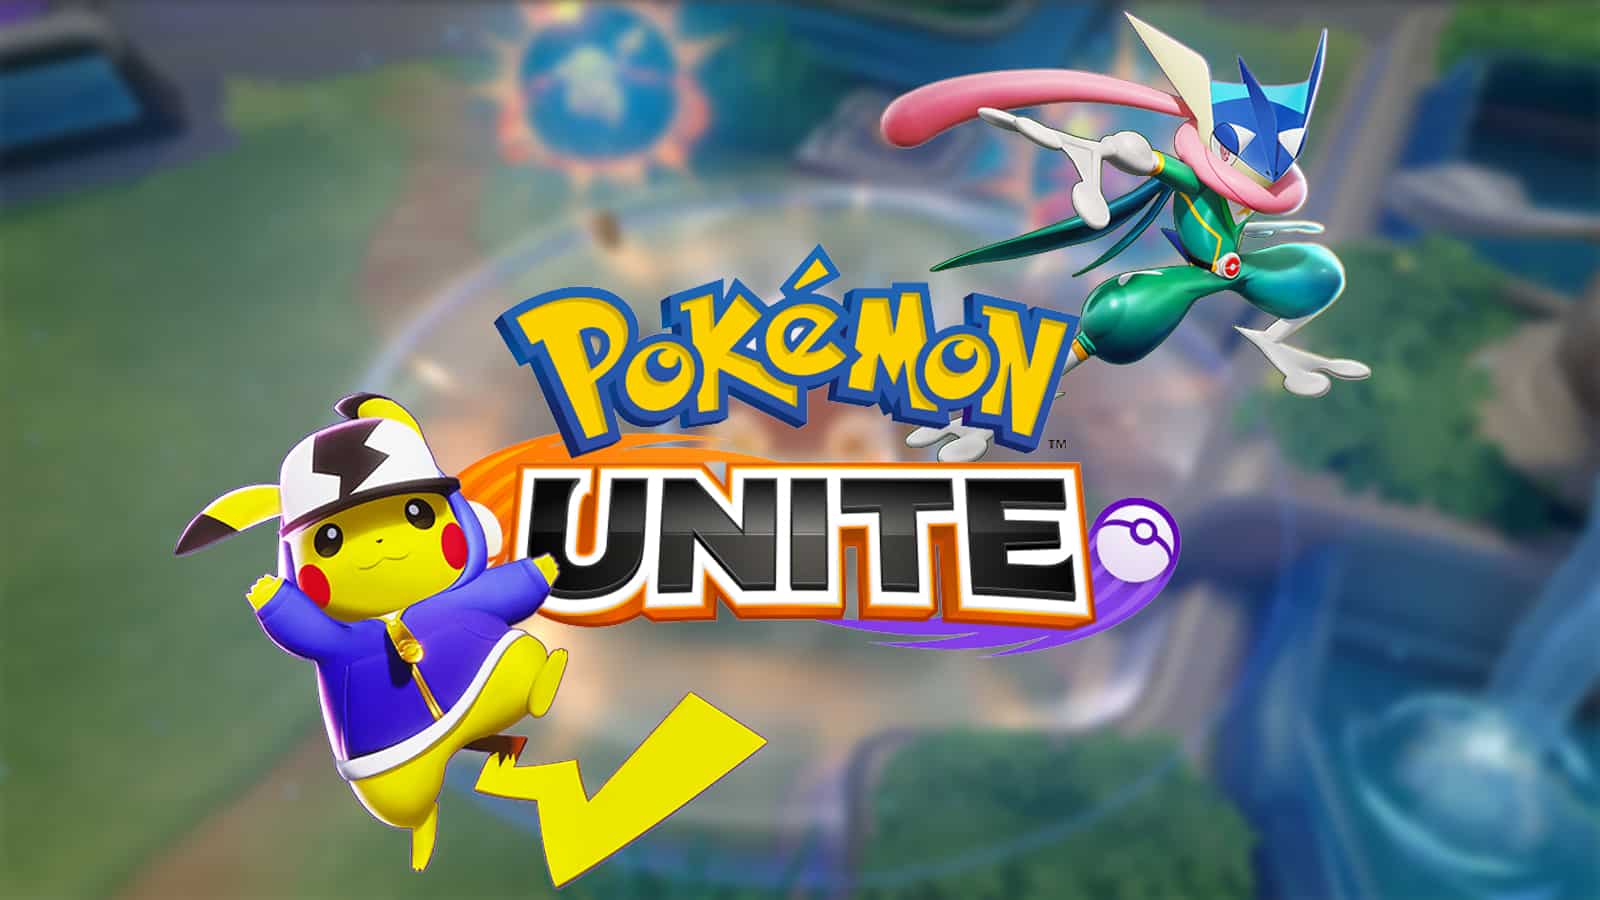 Pokemon Unite features